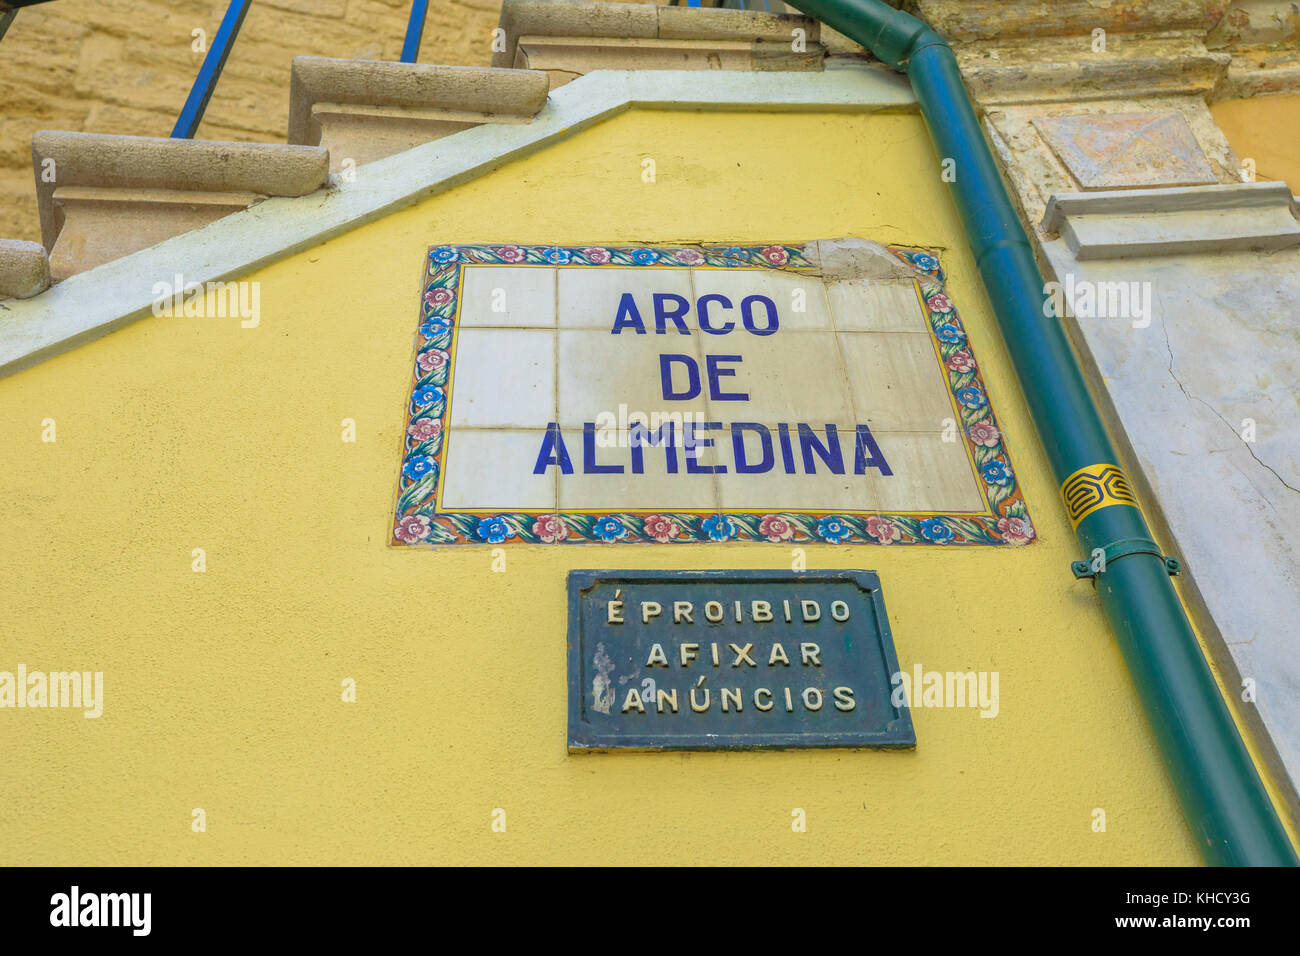 Arch of Almedina sign Stock Photo